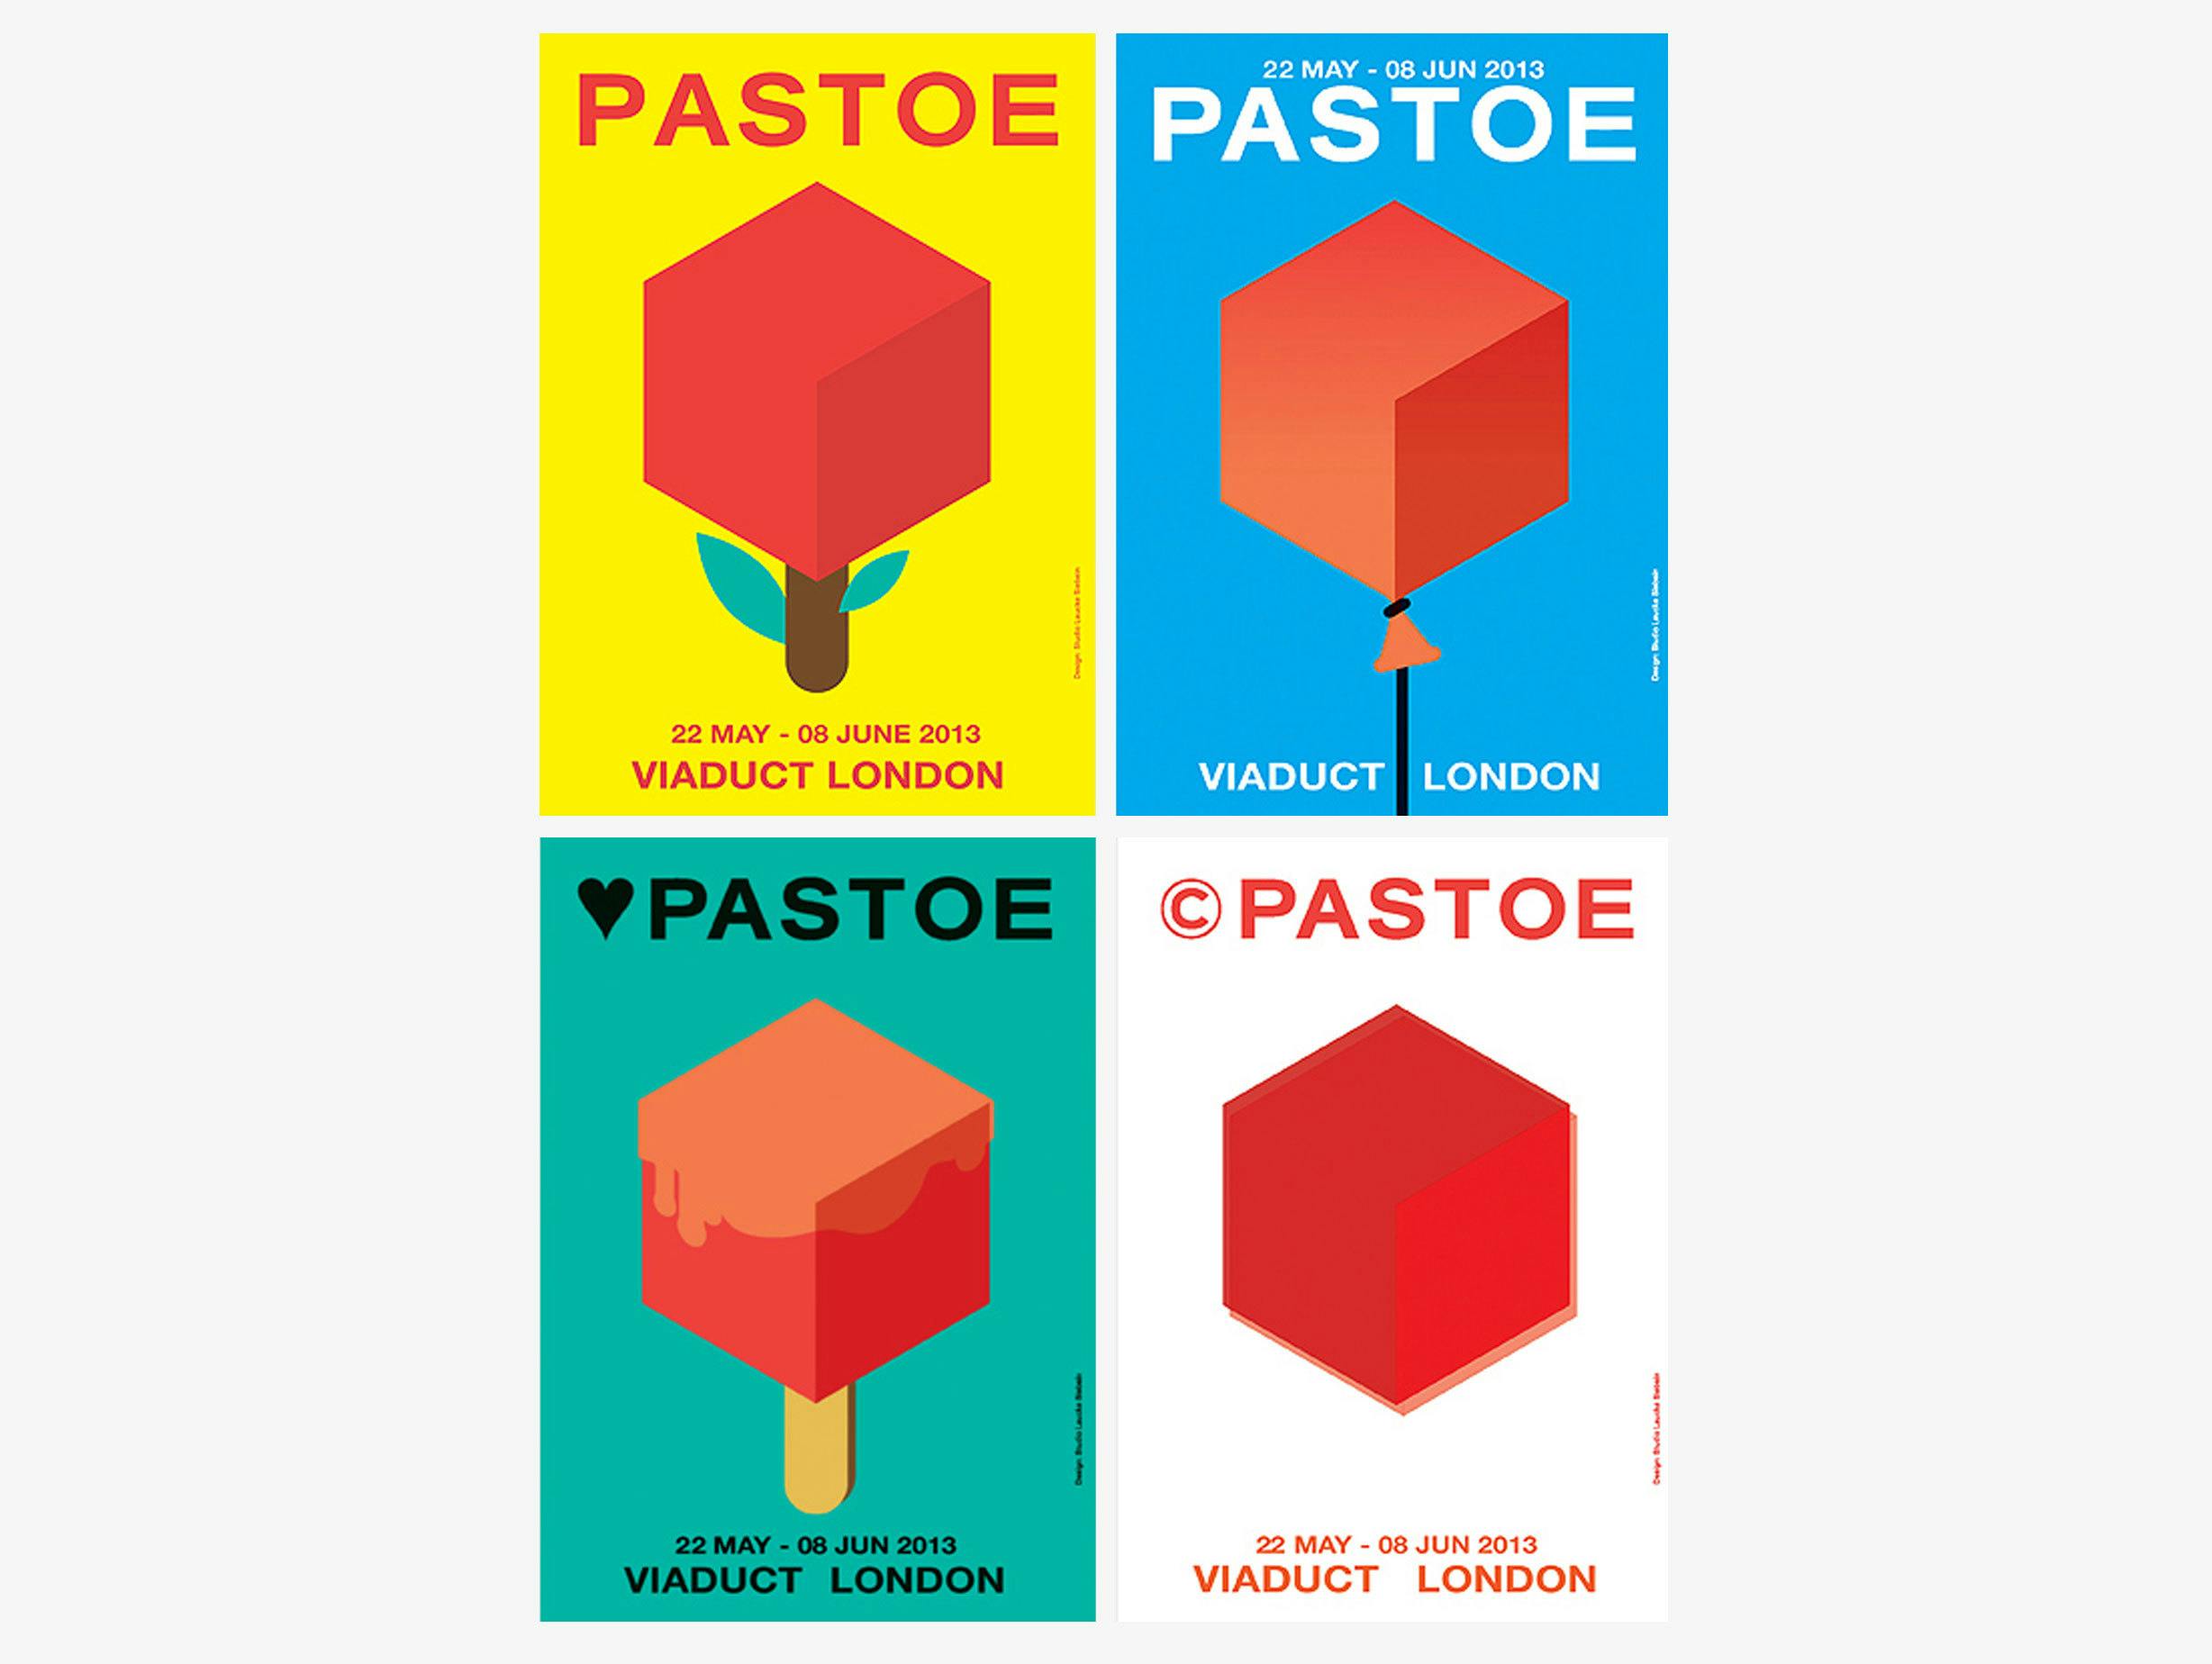 Show 6 Pastoe Invitations image